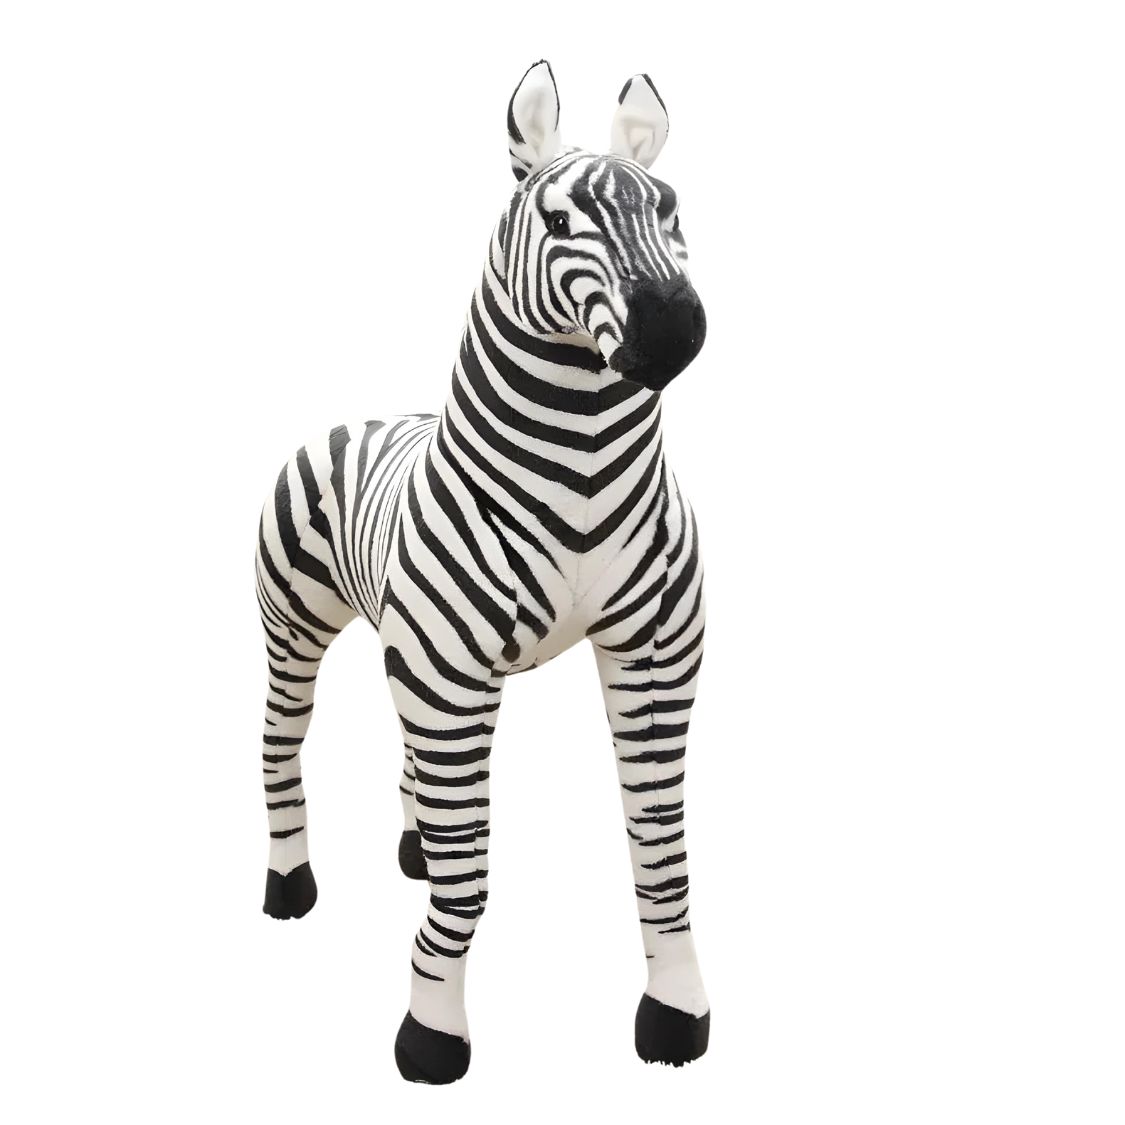 Rent Zebra Stuffed Animal